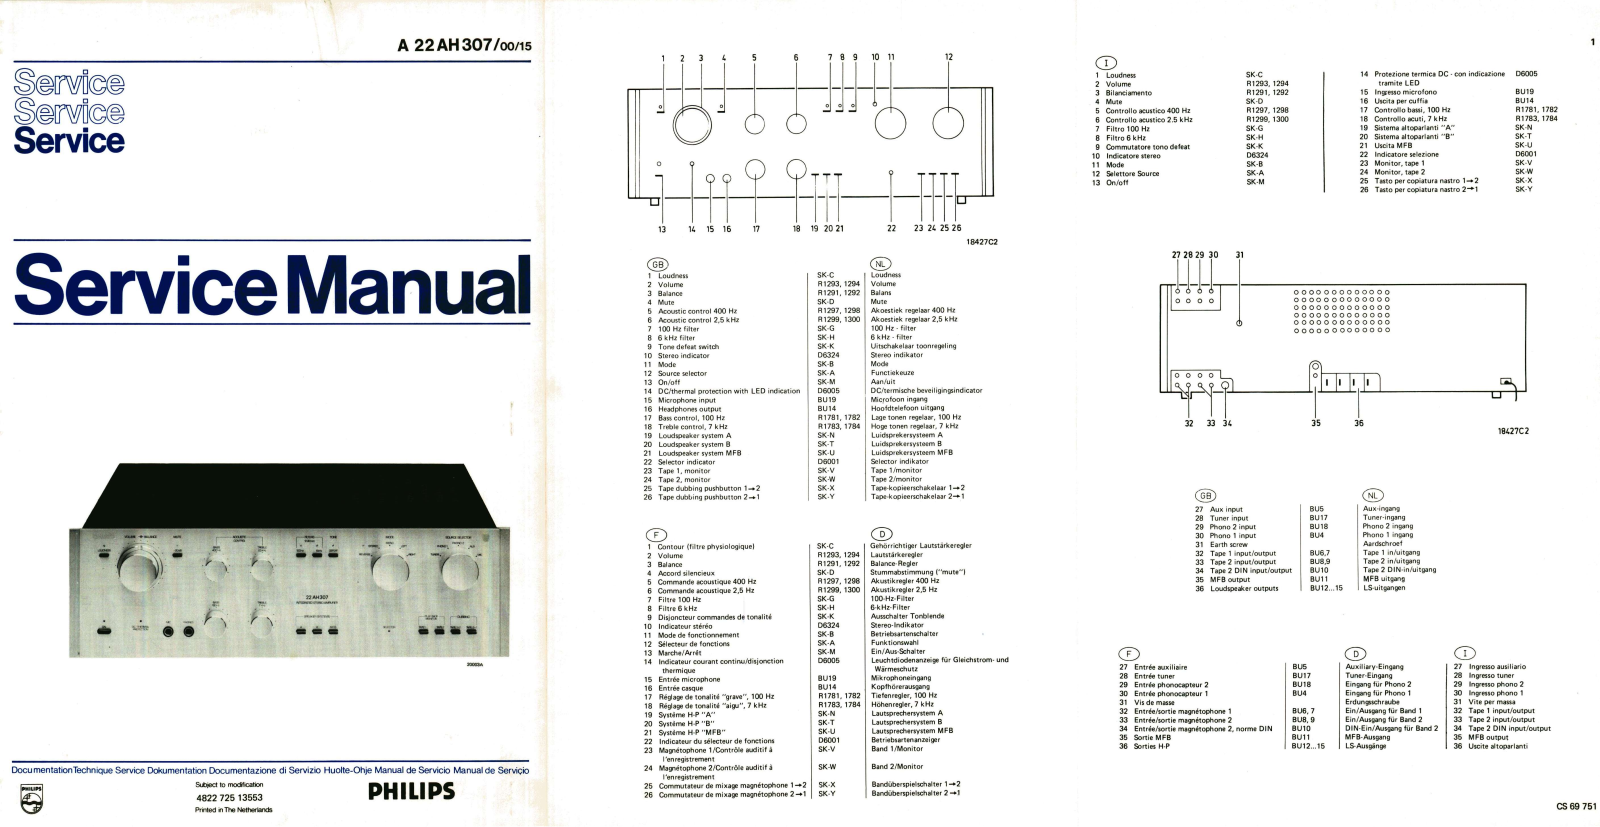 Philips AH-307 Service Manual